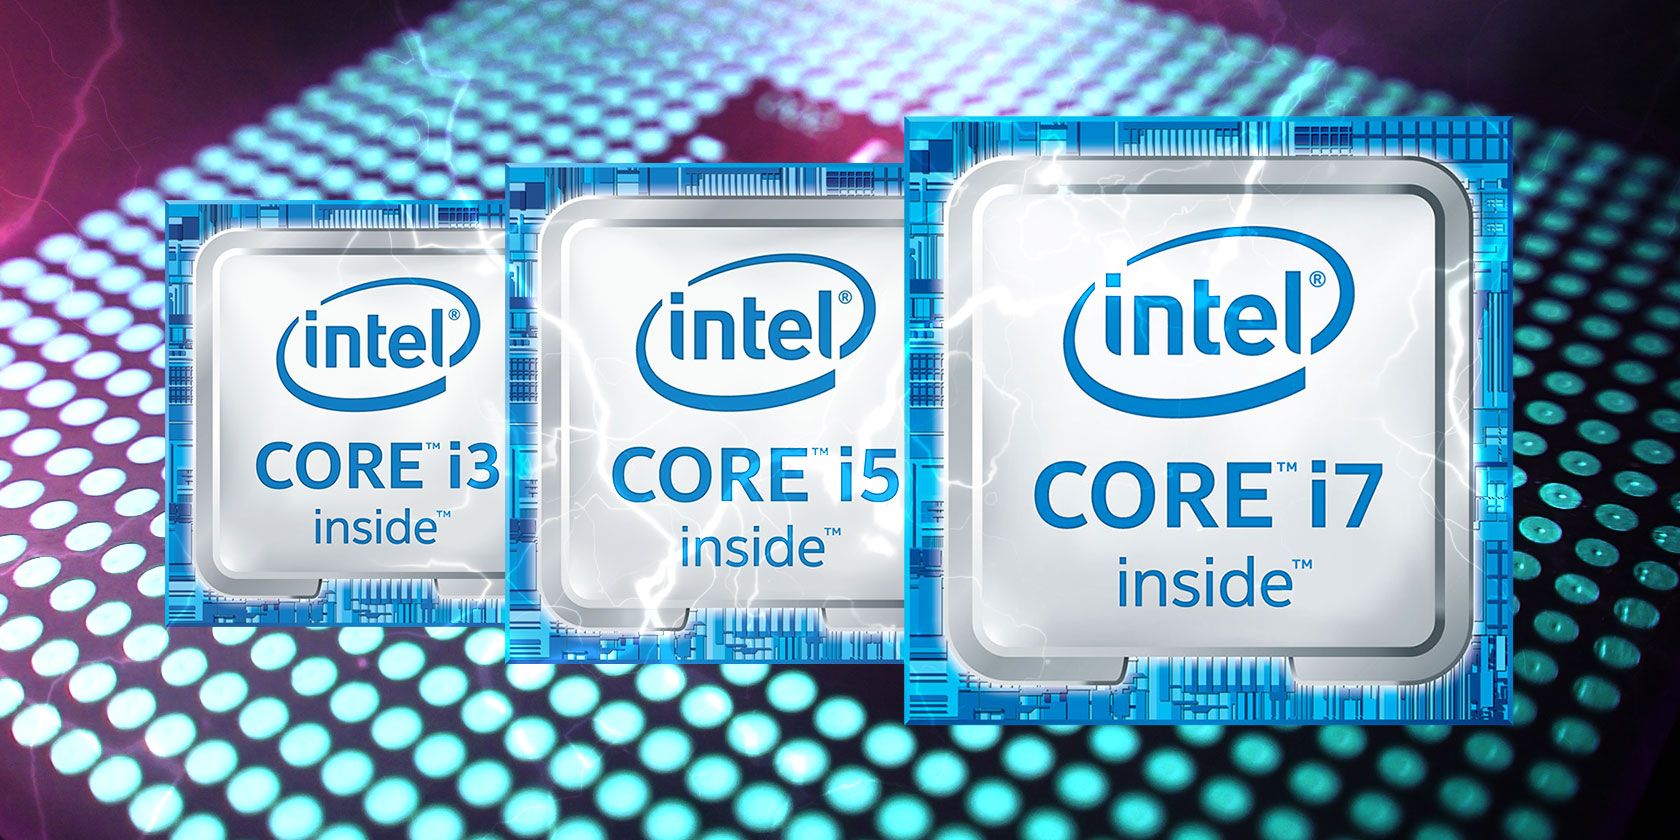 Laan stil Pickering Intel Core i3 vs. i5 vs. i7: Which CPU Should You Buy?